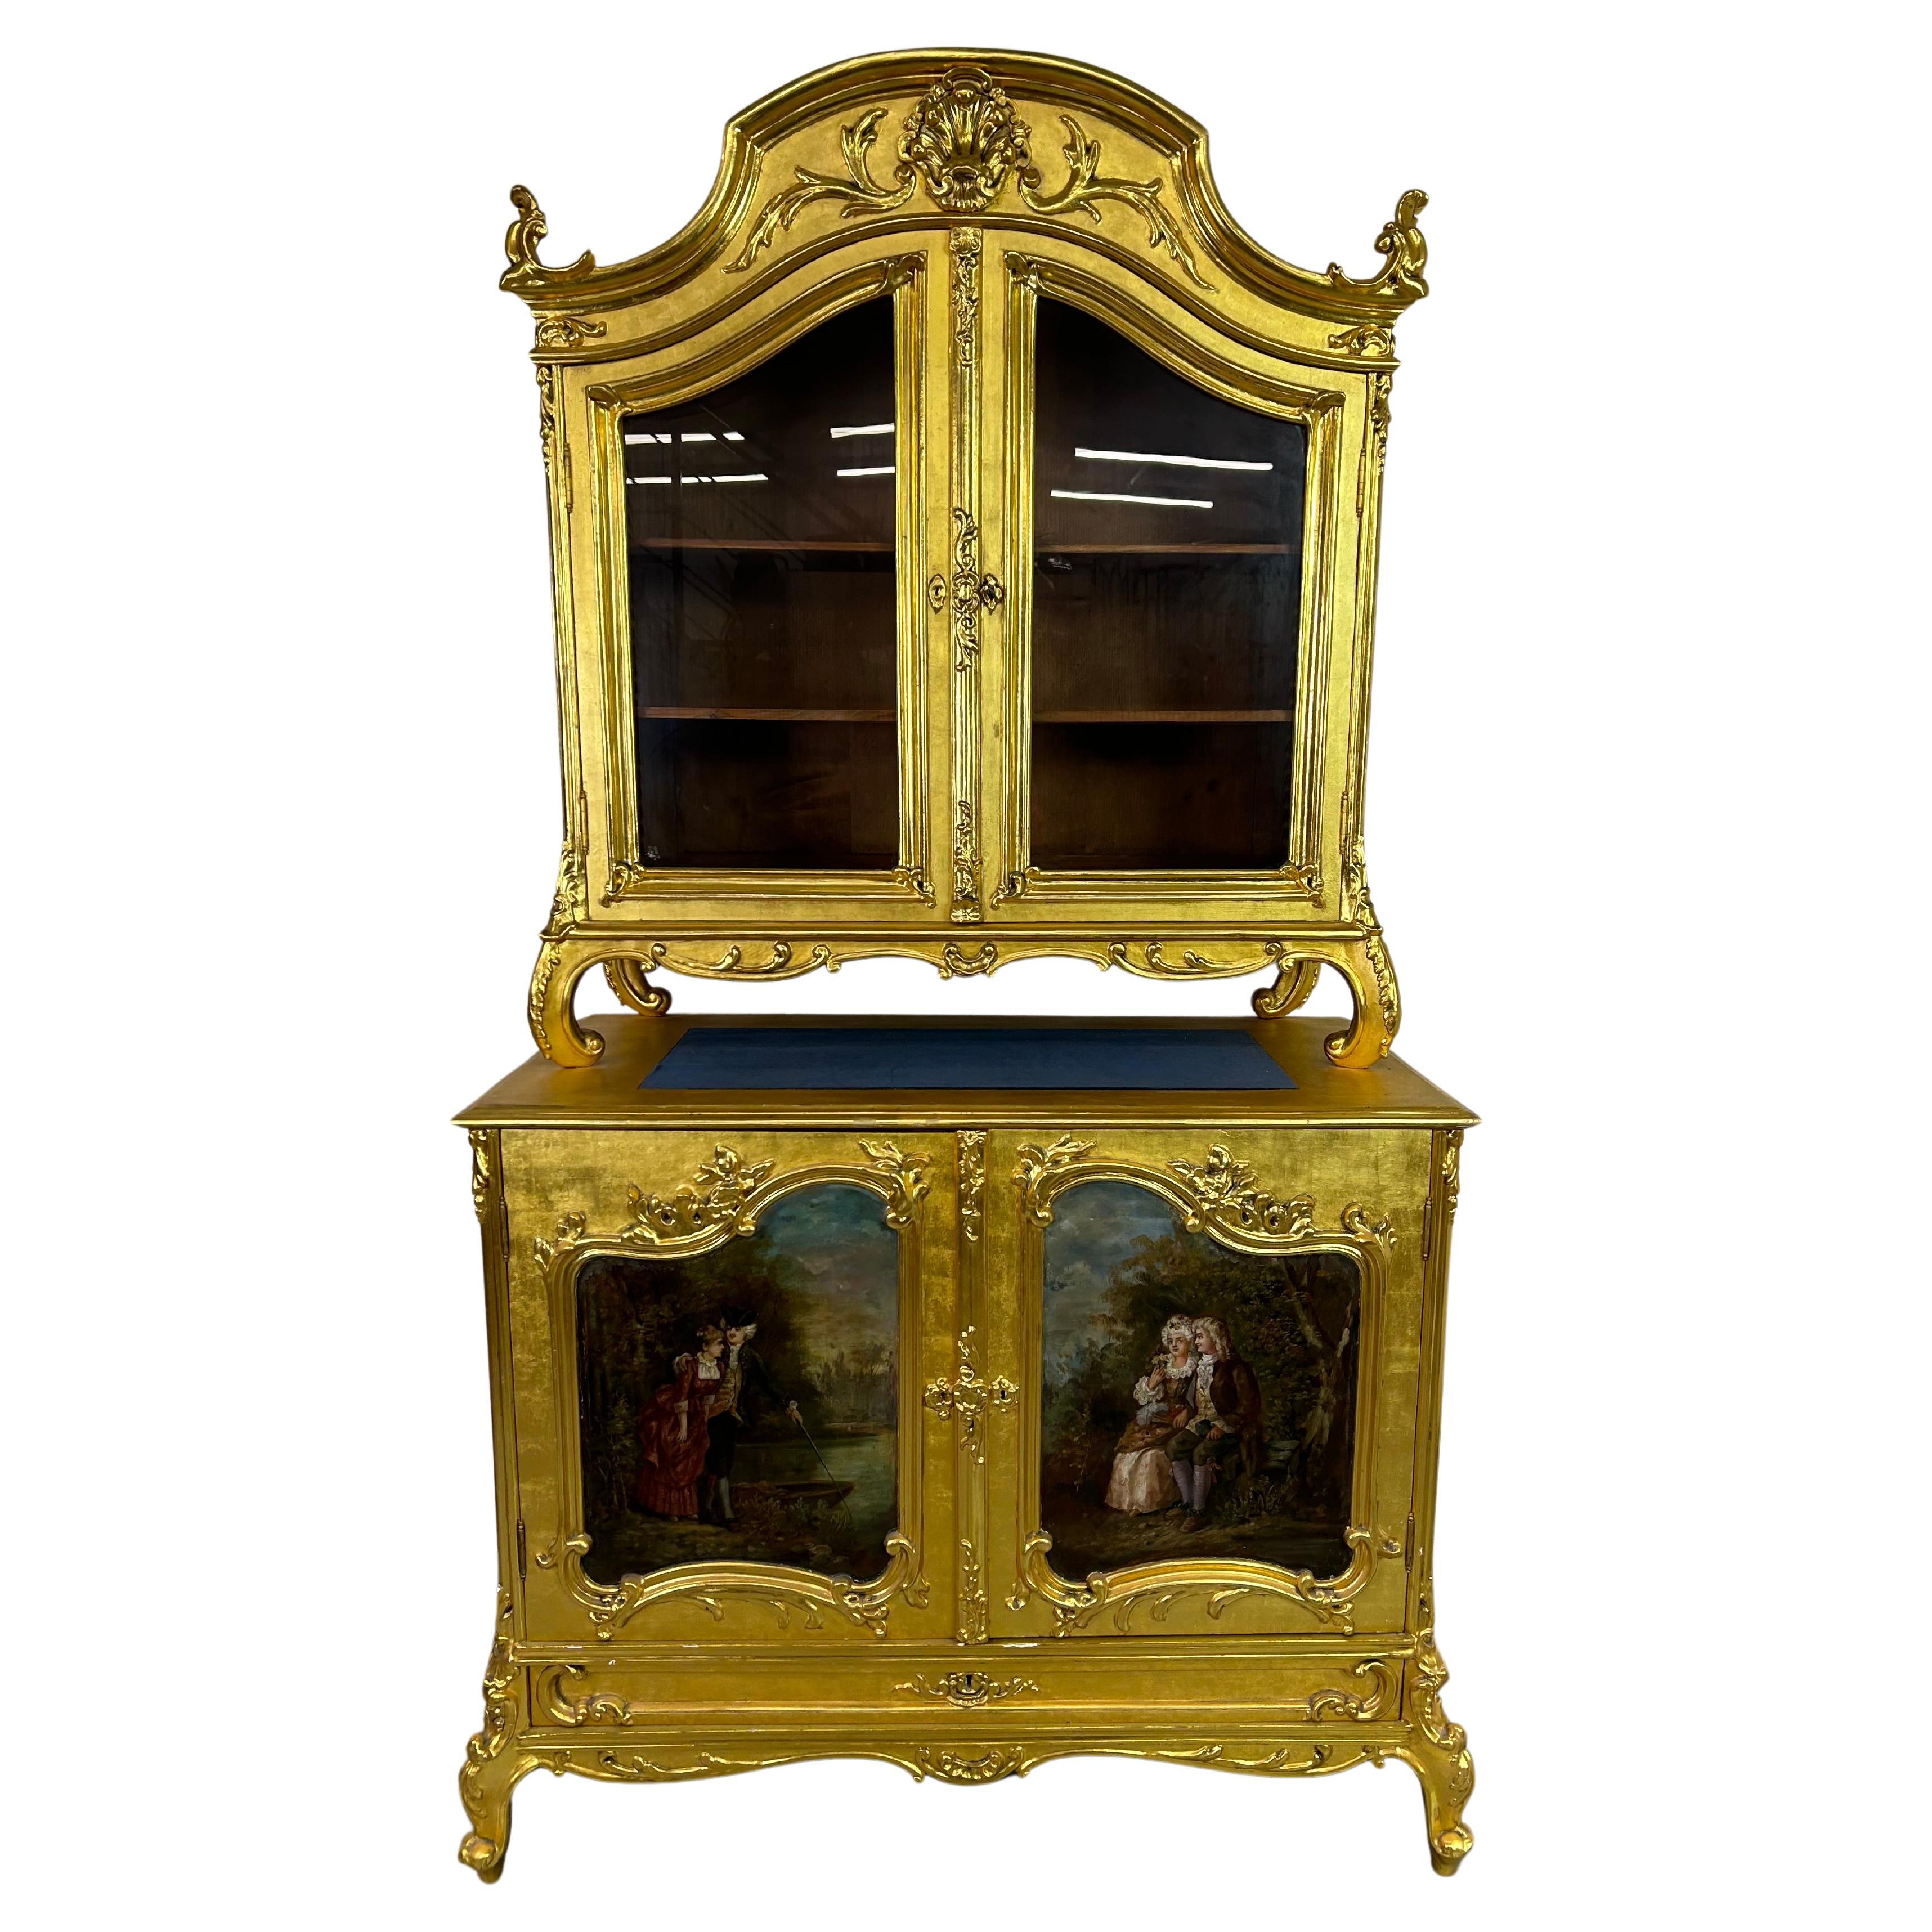 Vergoldetes Rokoko-Sideboard aus dem 18. Jahrhundert